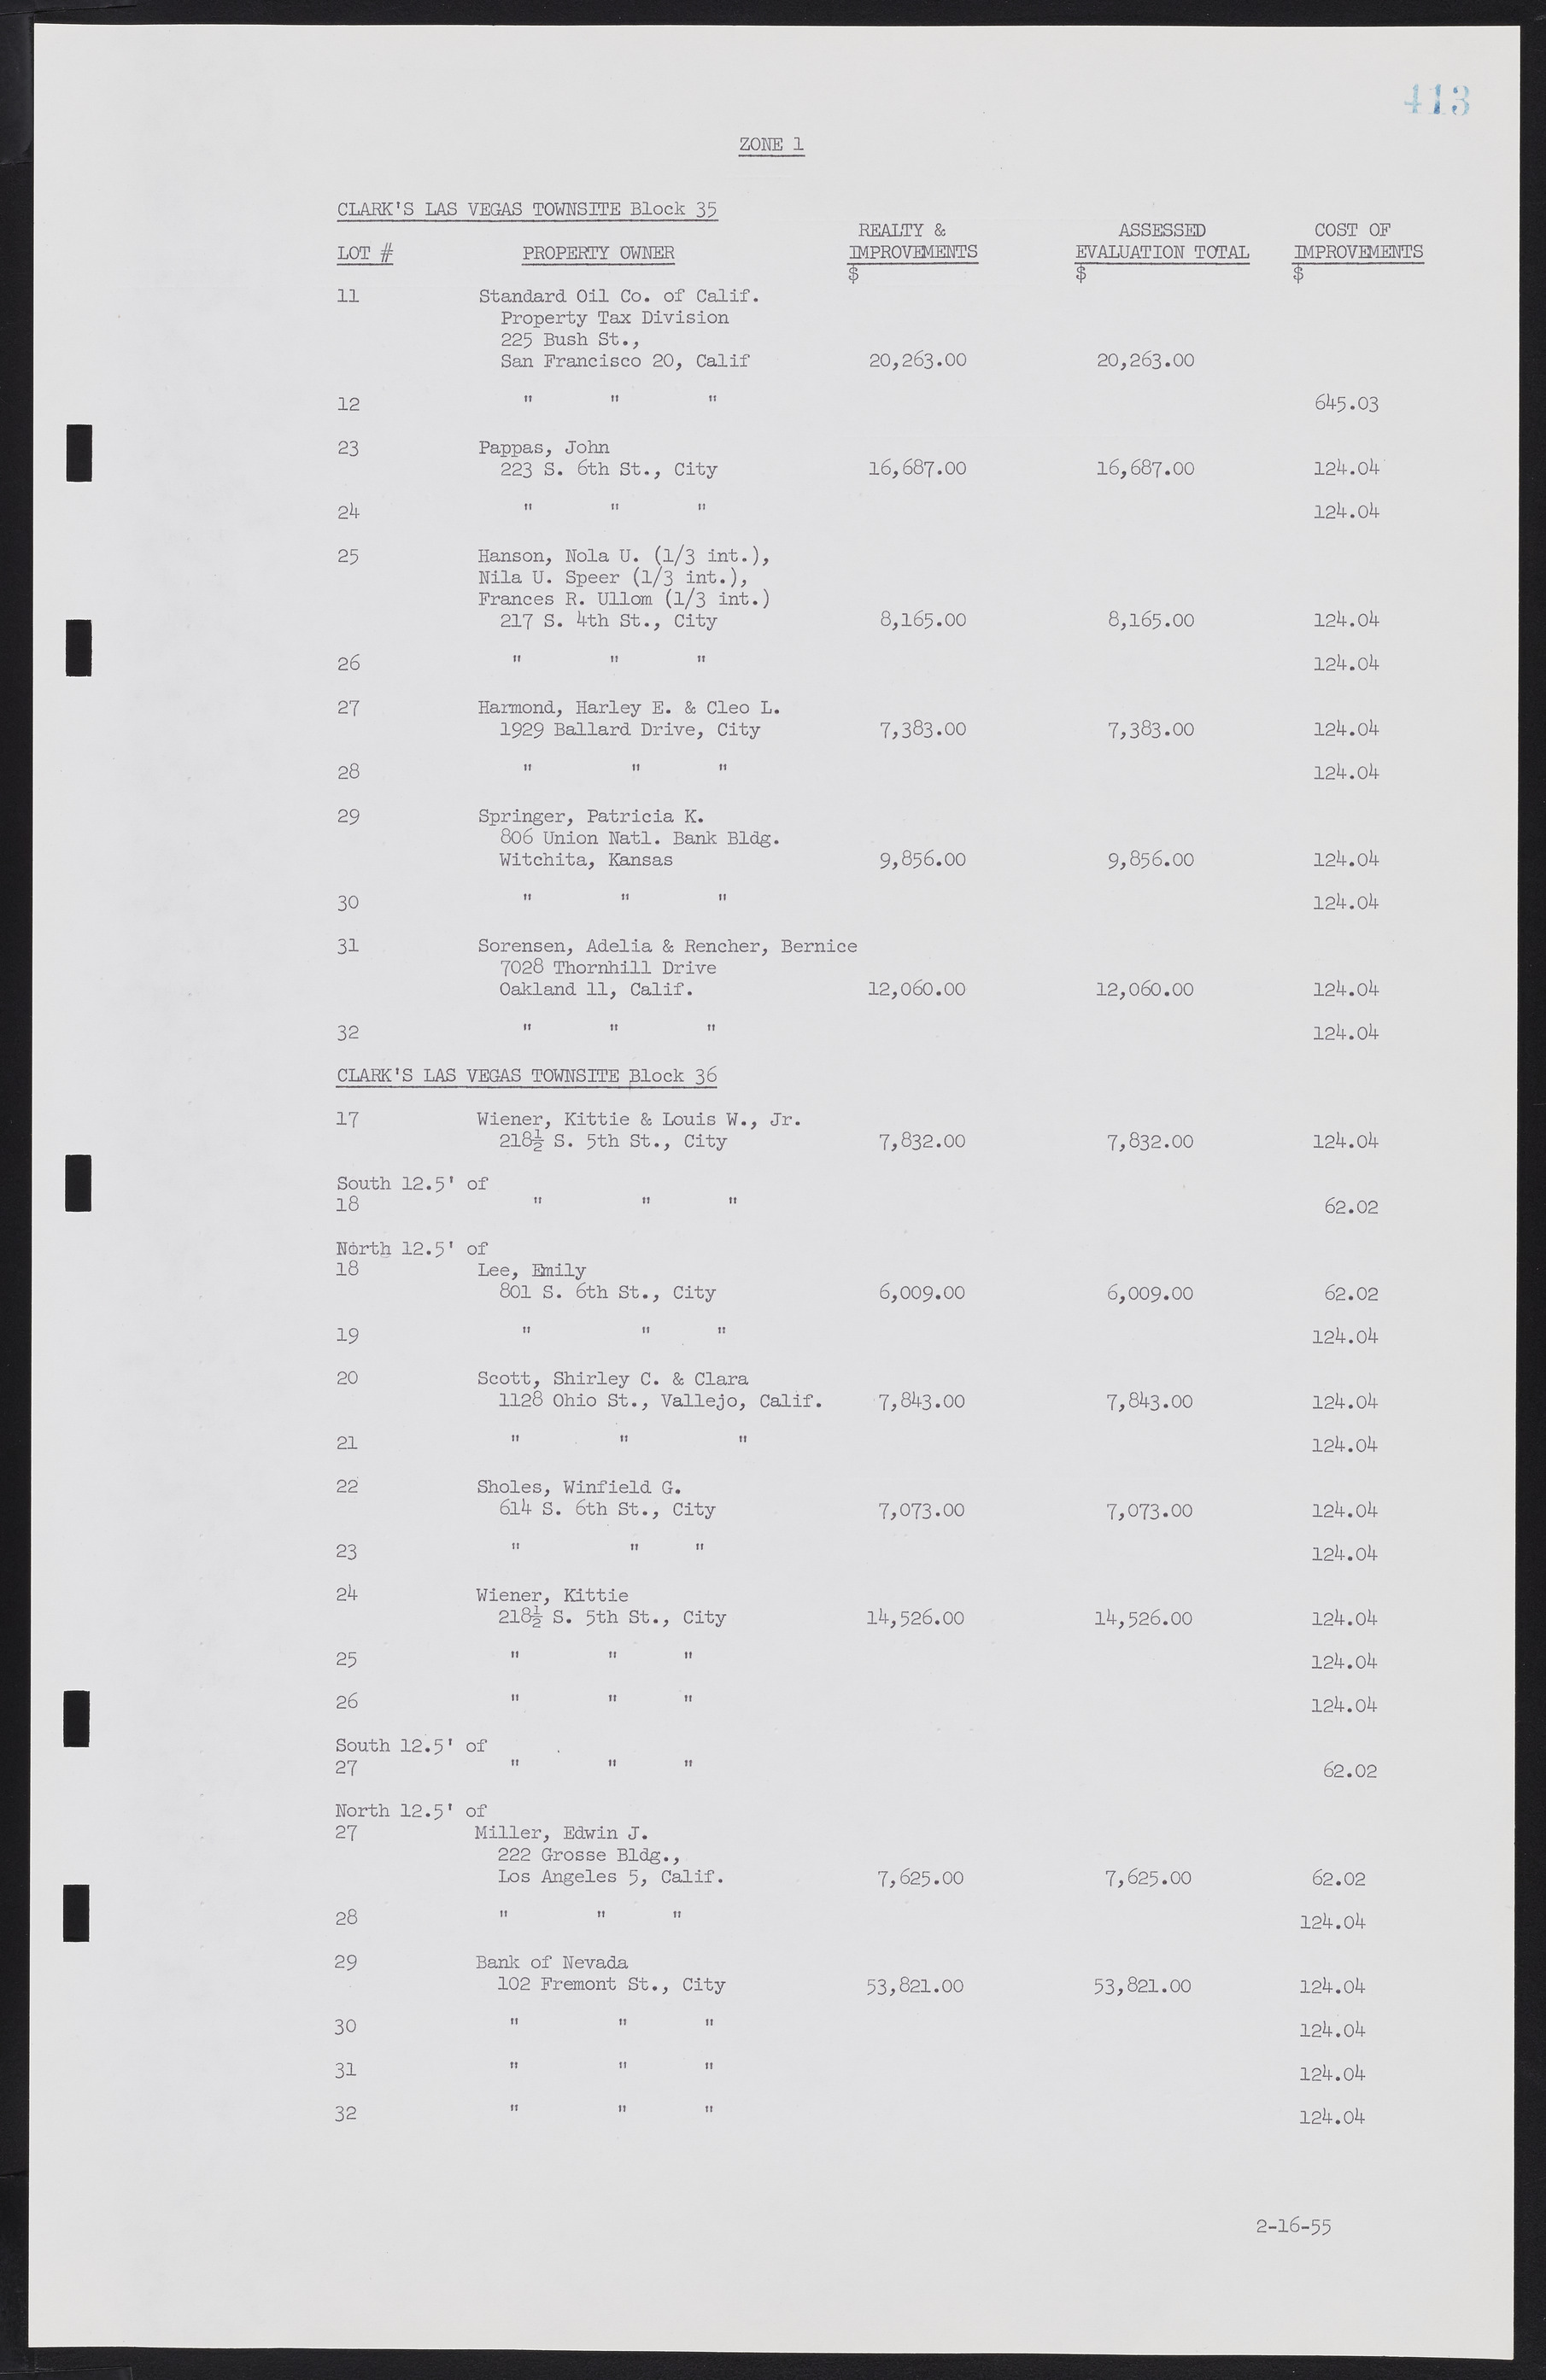 Las Vegas City Commission Minutes, February 17, 1954 to September 21, 1955, lvc000009-419